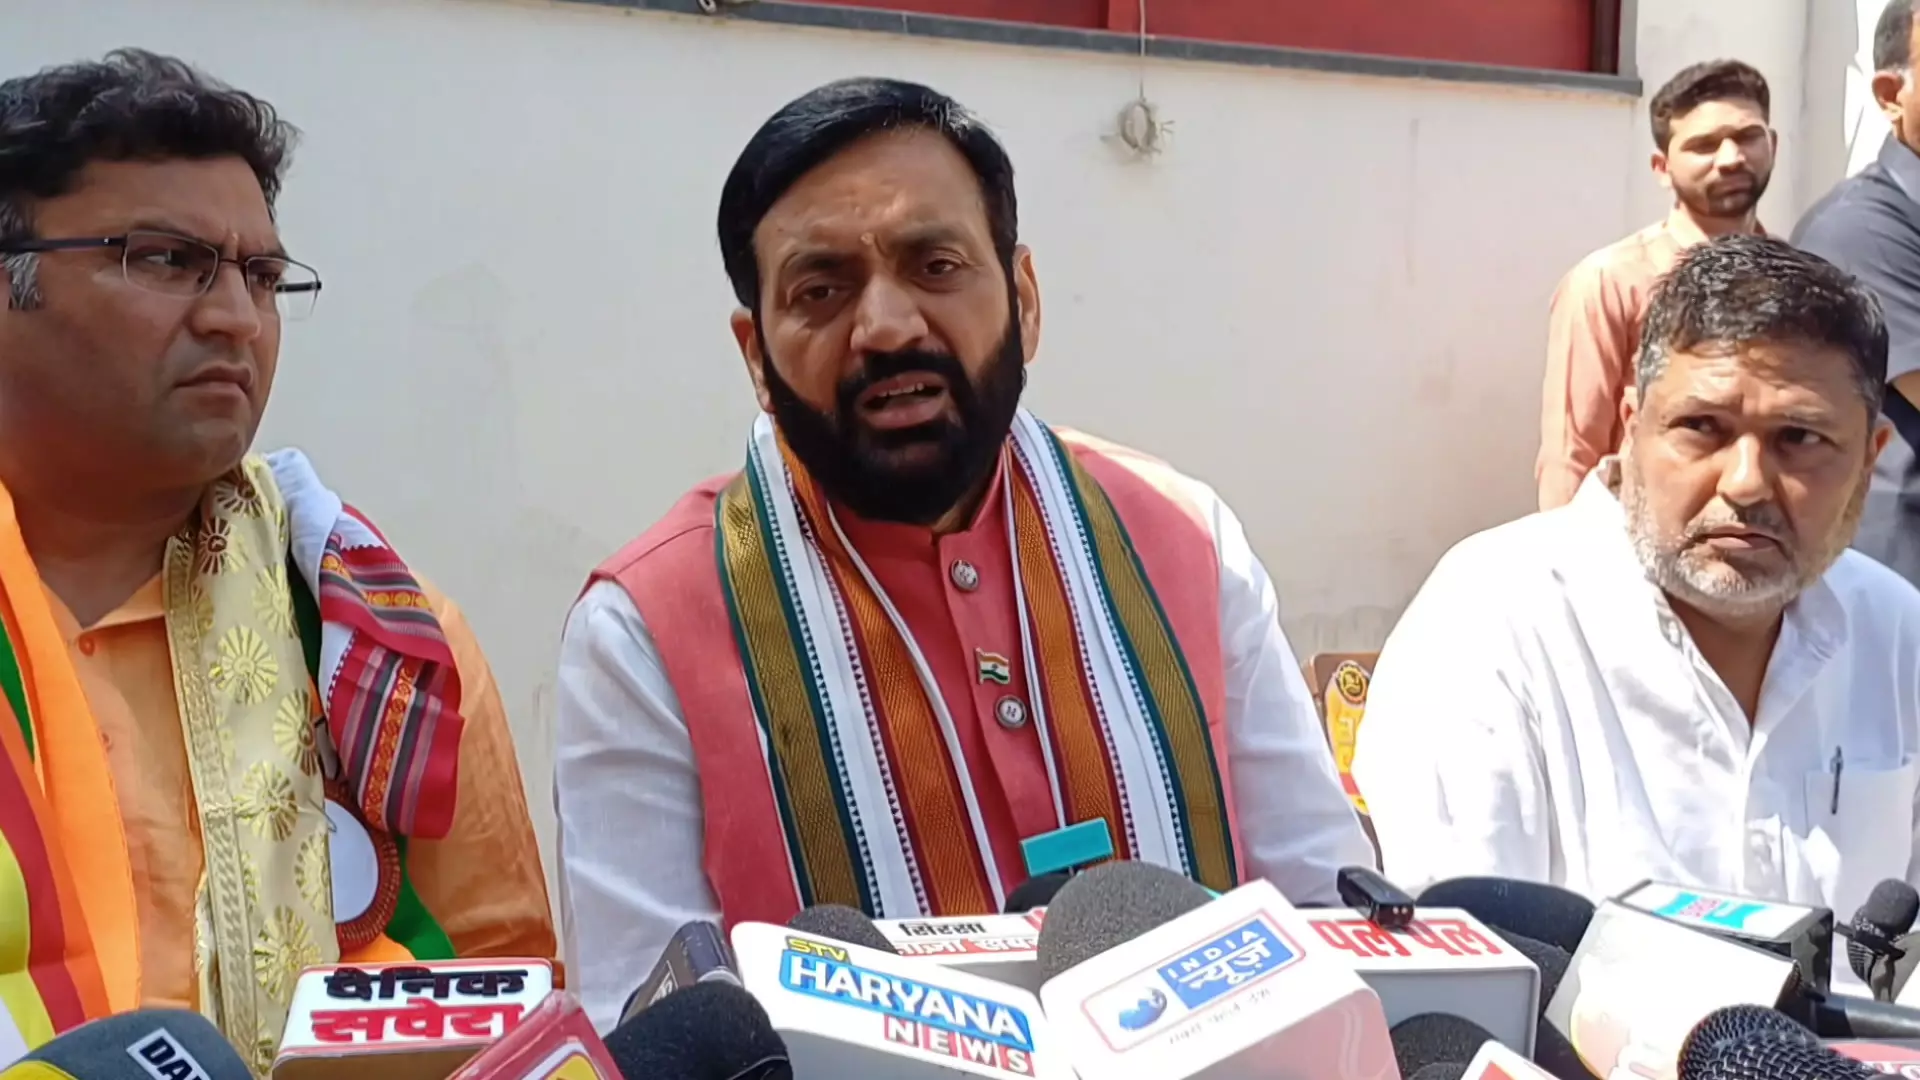 Haryana: Congress to write to Guv seeking BJP govt’s dismissal, fresh polls